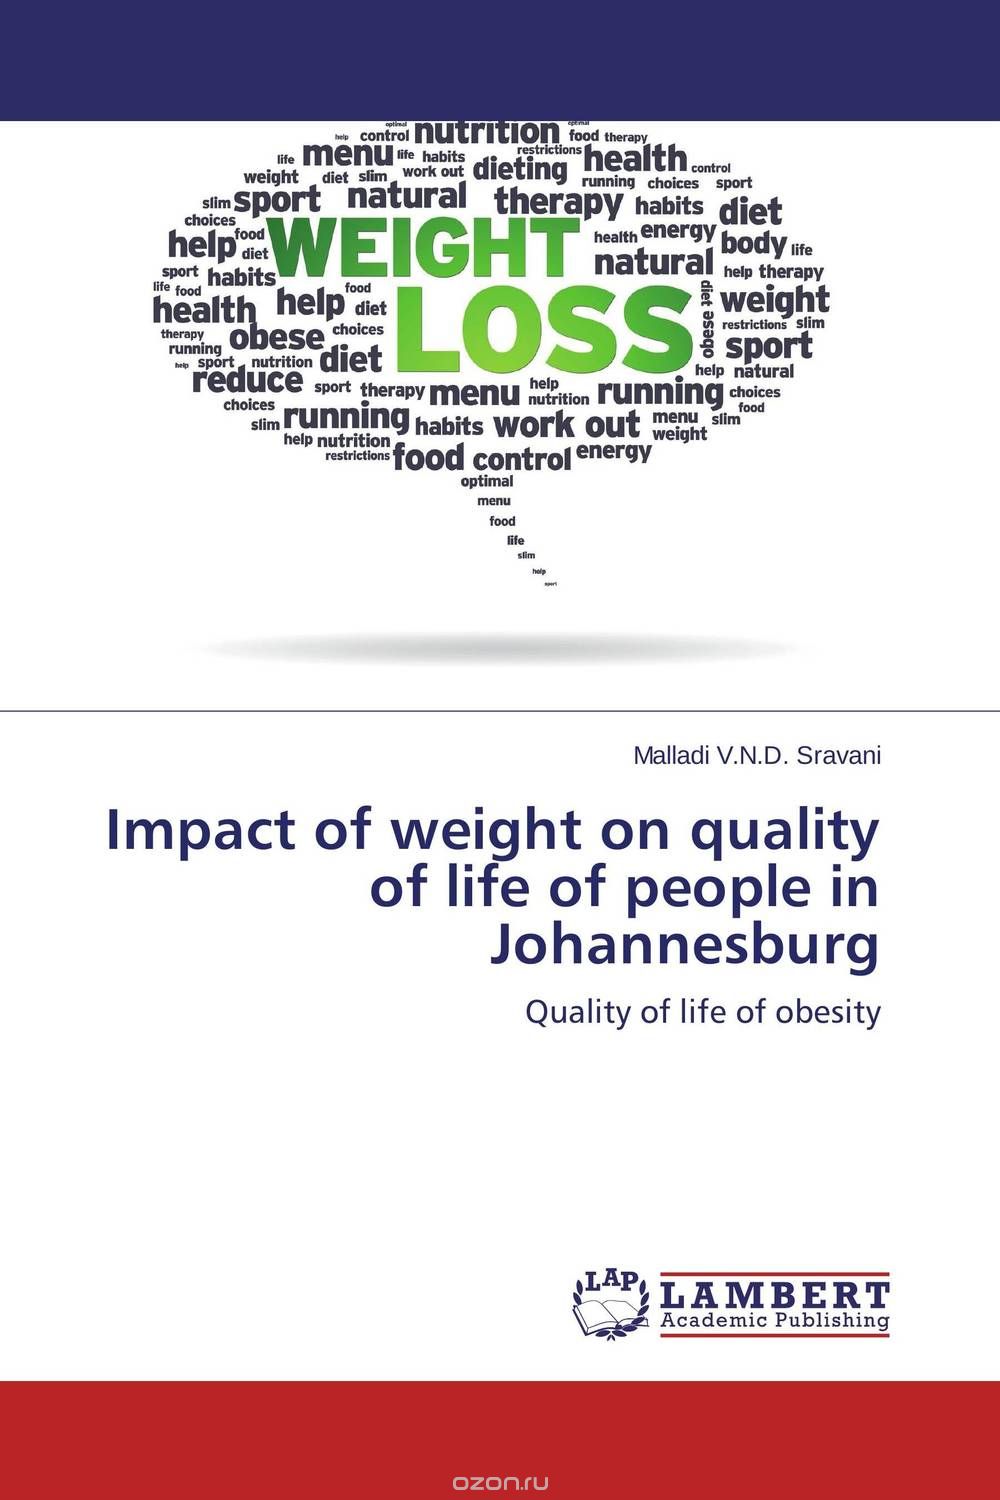 Скачать книгу "Impact of weight on quality of life of people in Johannesburg"